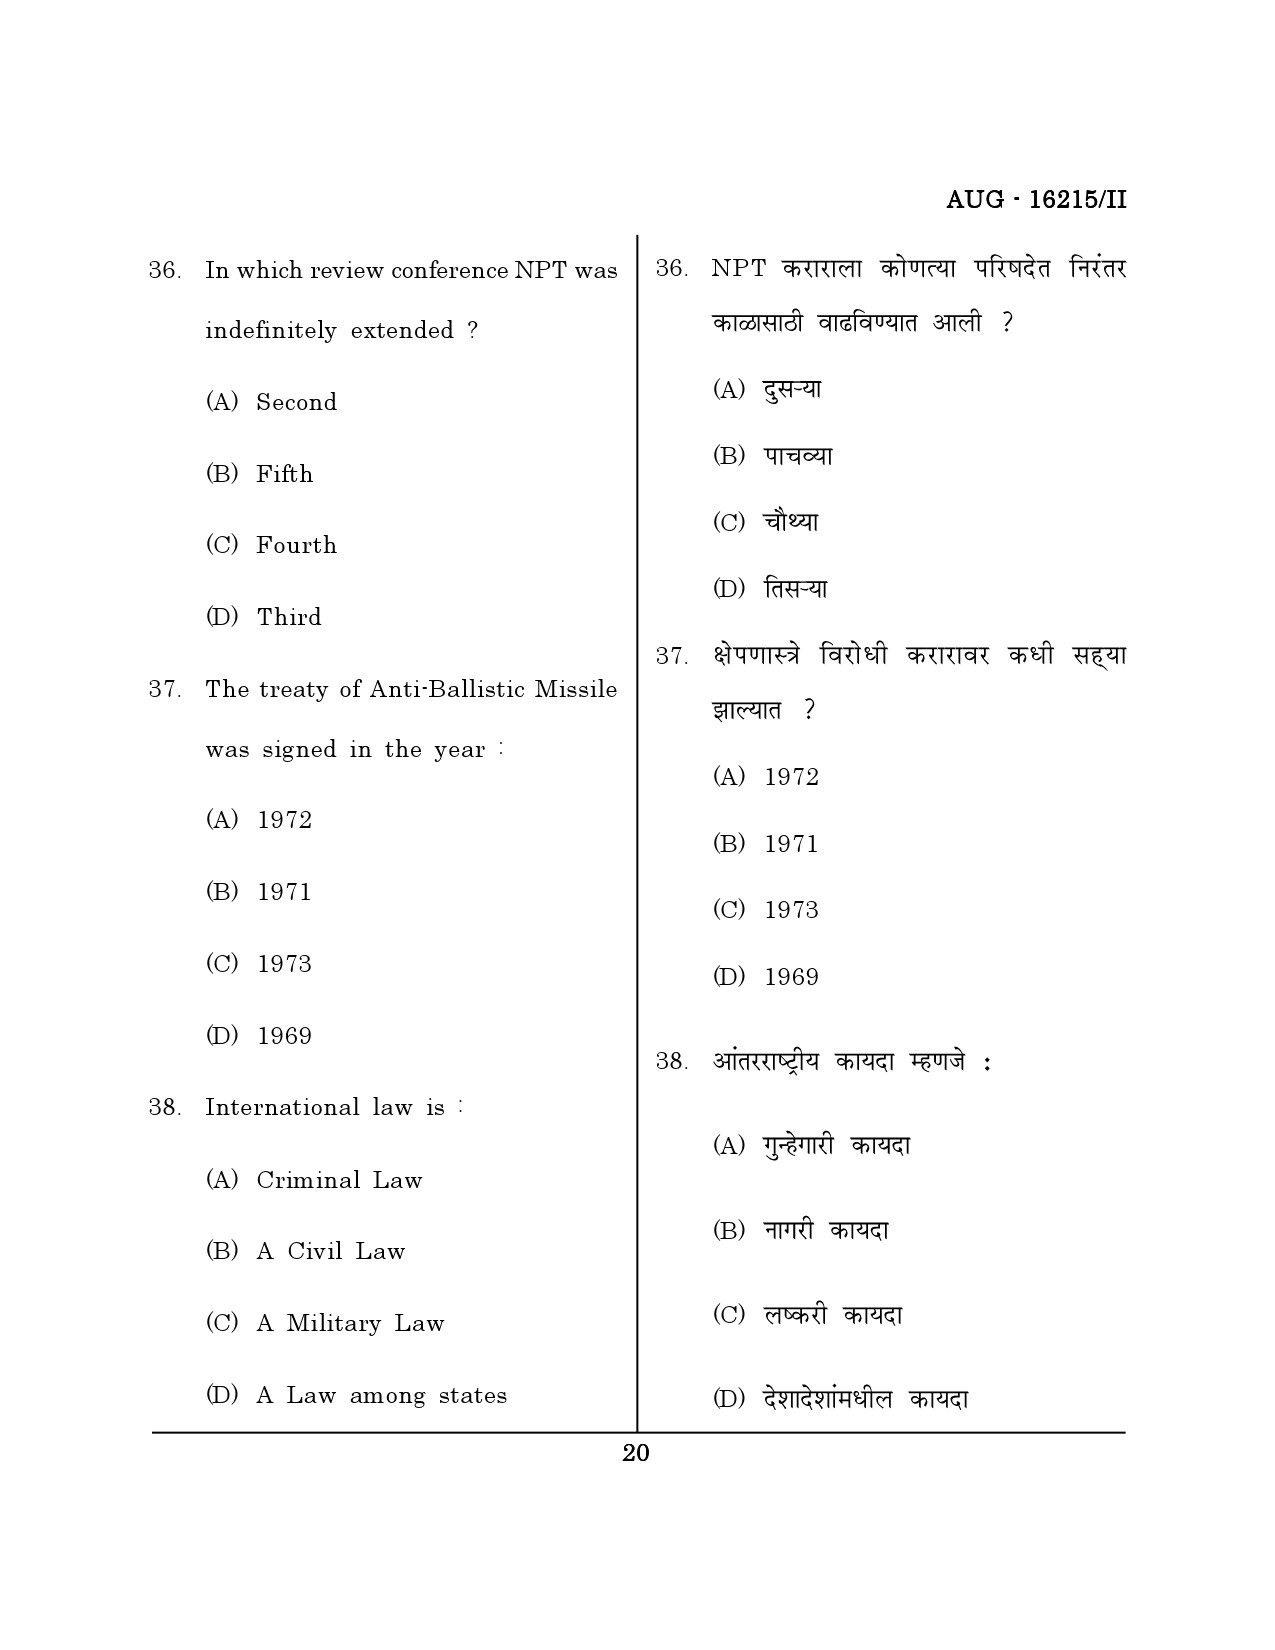 Maharashtra SET Defence and Strategic Studies Question Paper II August 2015 19